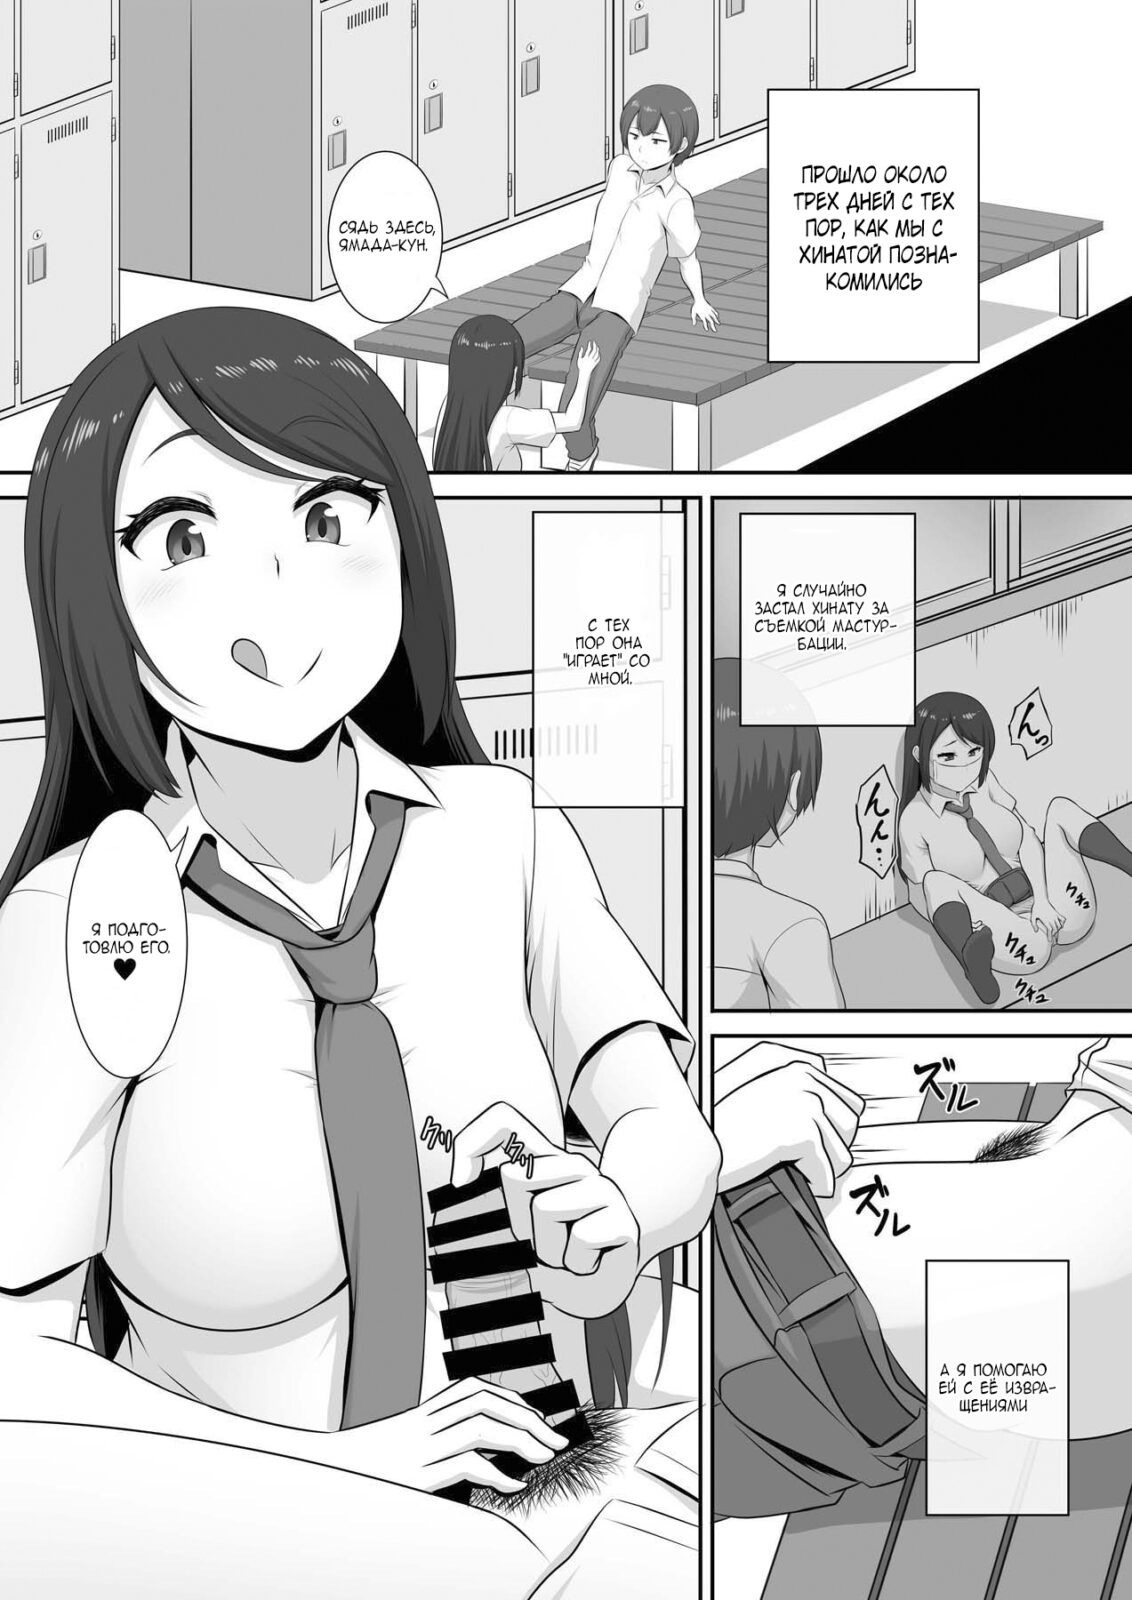 Hinata-san no Hatsujou Jijou хентай манга на русском - школьницы, Школа, фетиш, минет, большие сиськи